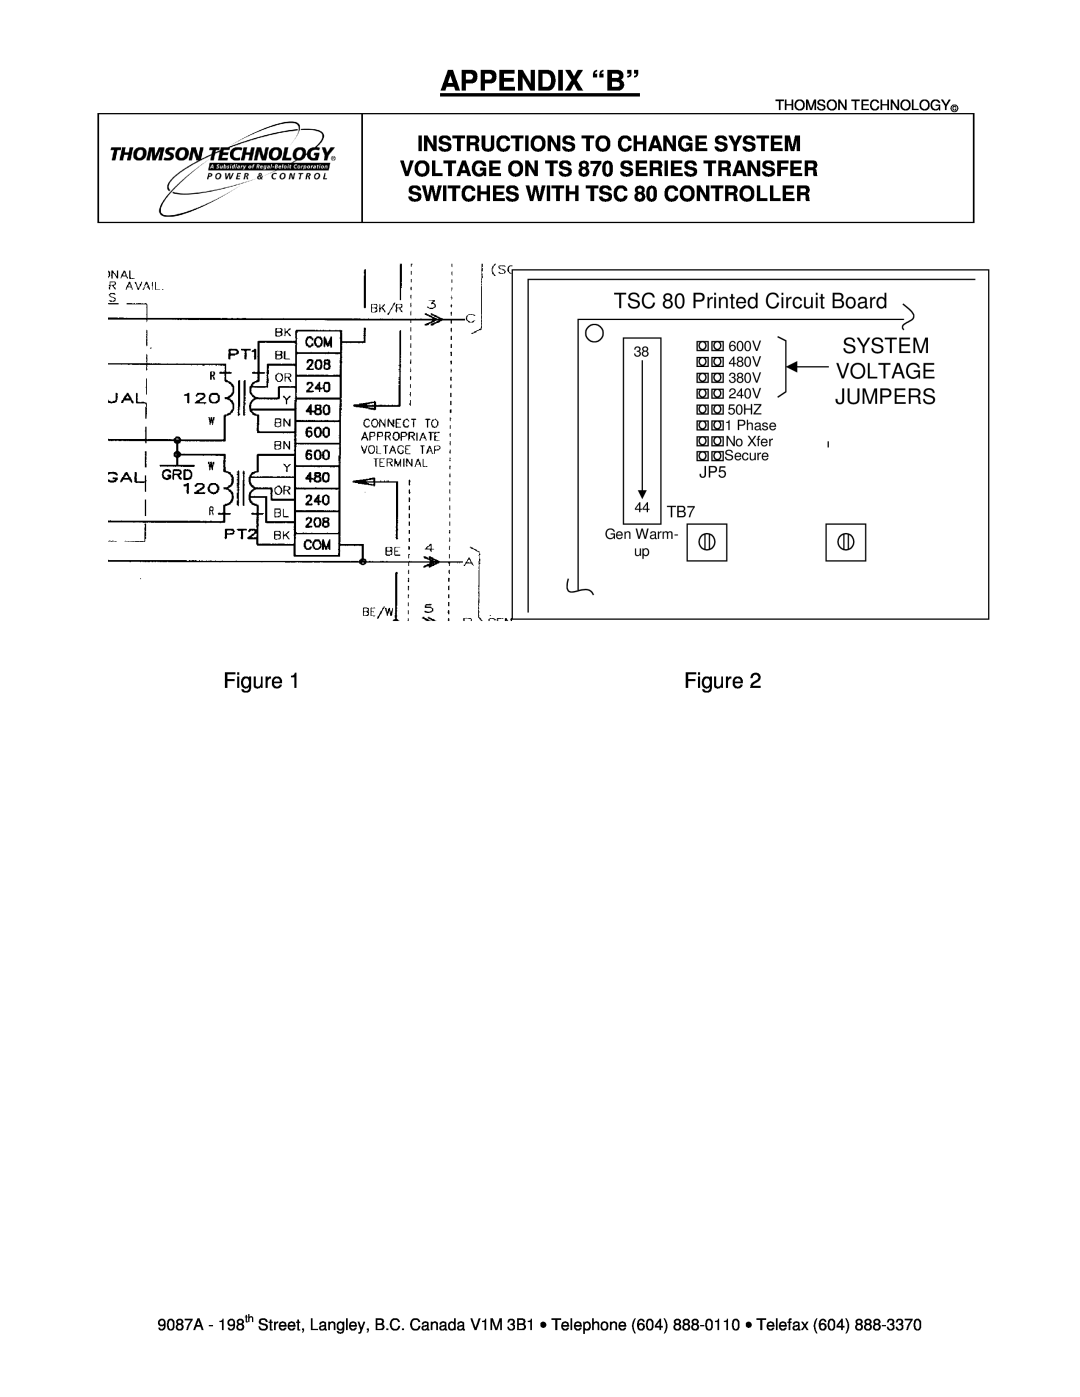 Technicolor - Thomson Appendix “B”, INSTRUCTIONS TO CHANGE SYSTEM VOLTAGE ON TS 870 SERIES TRANSFER, 600V, 480V, 380V 